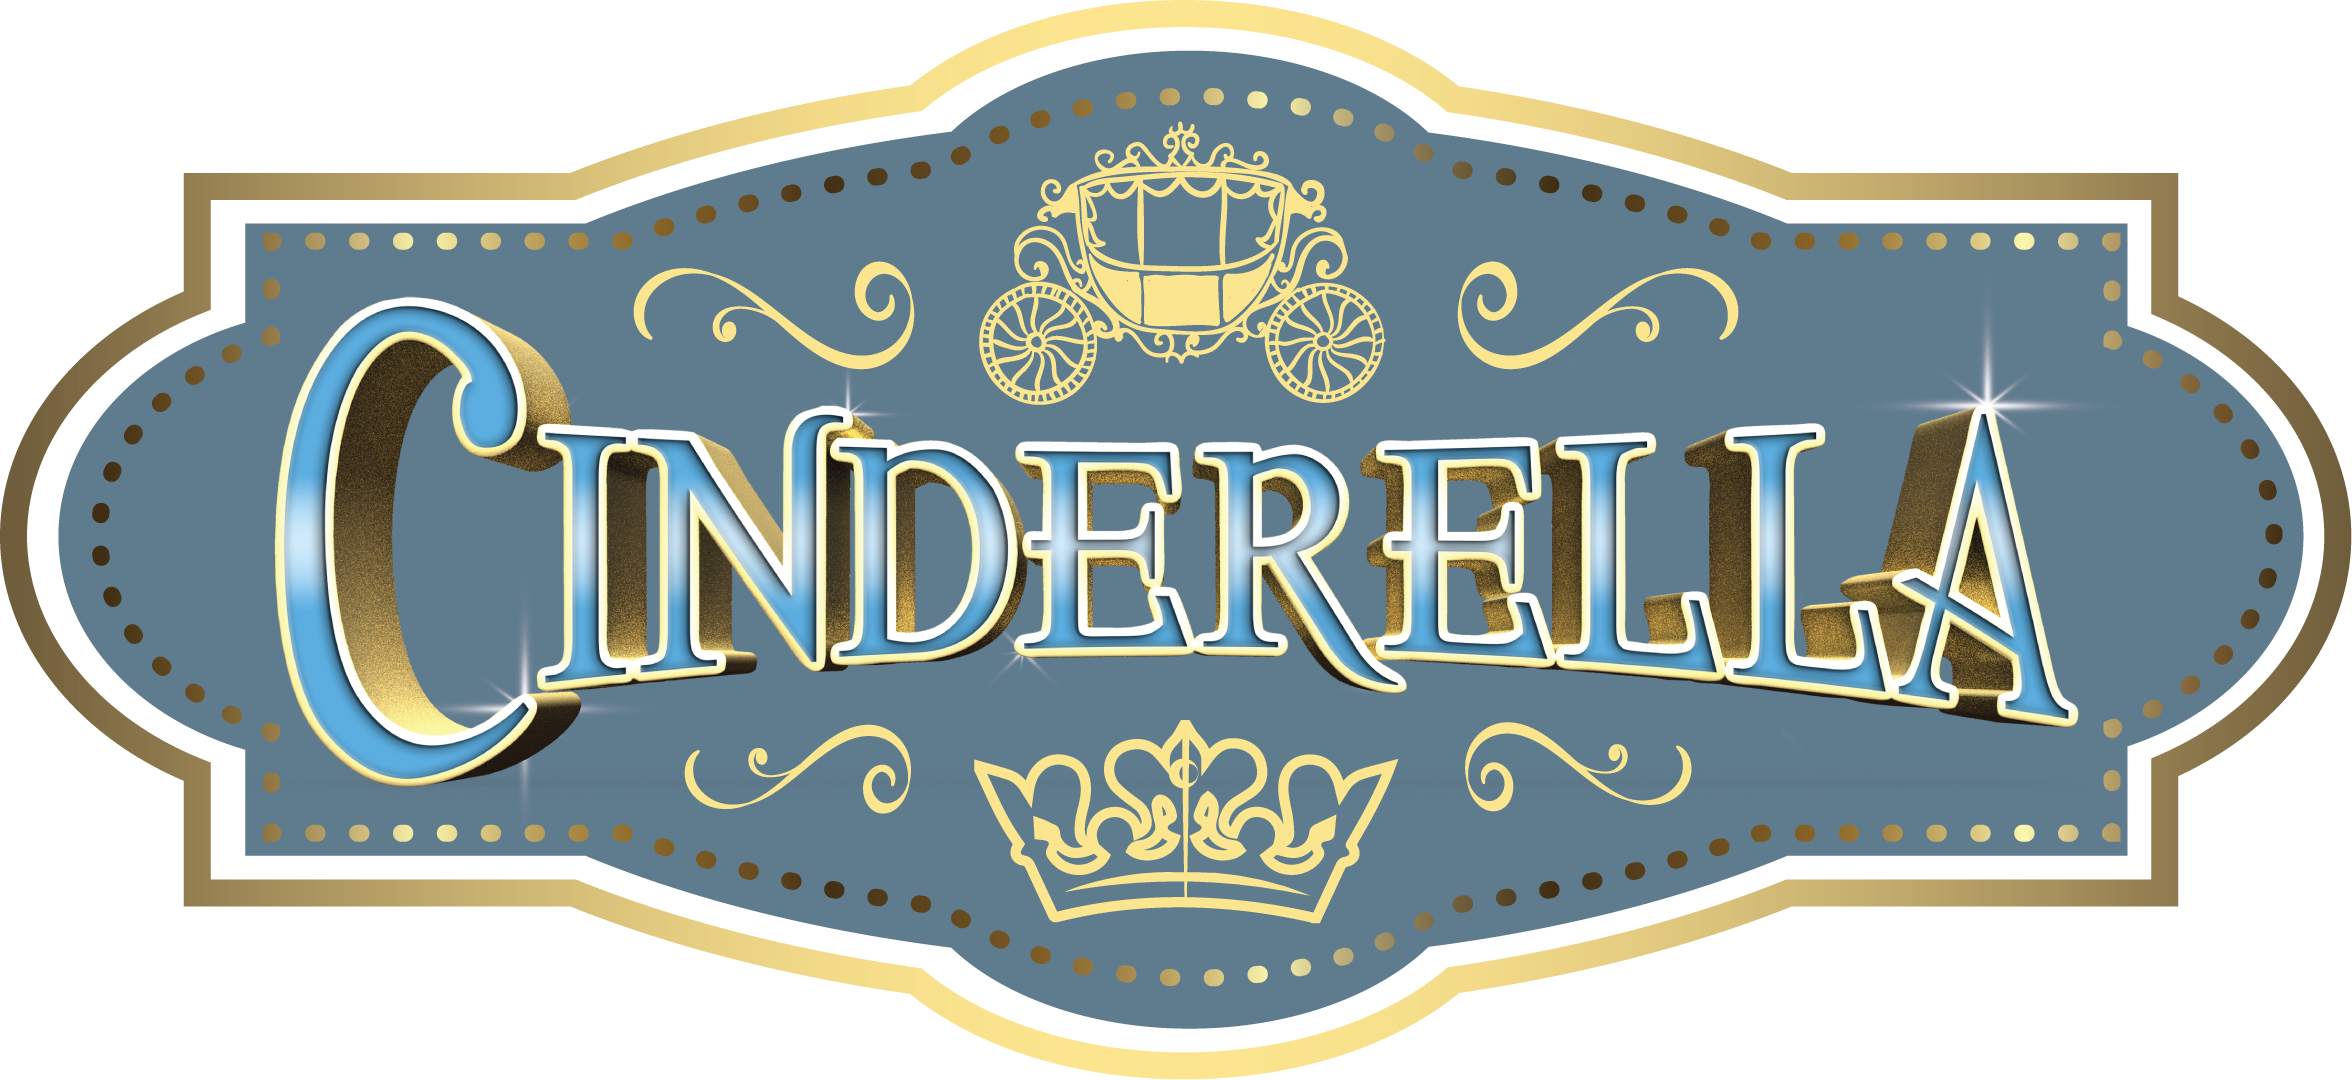 Cinderella Png PNG Image